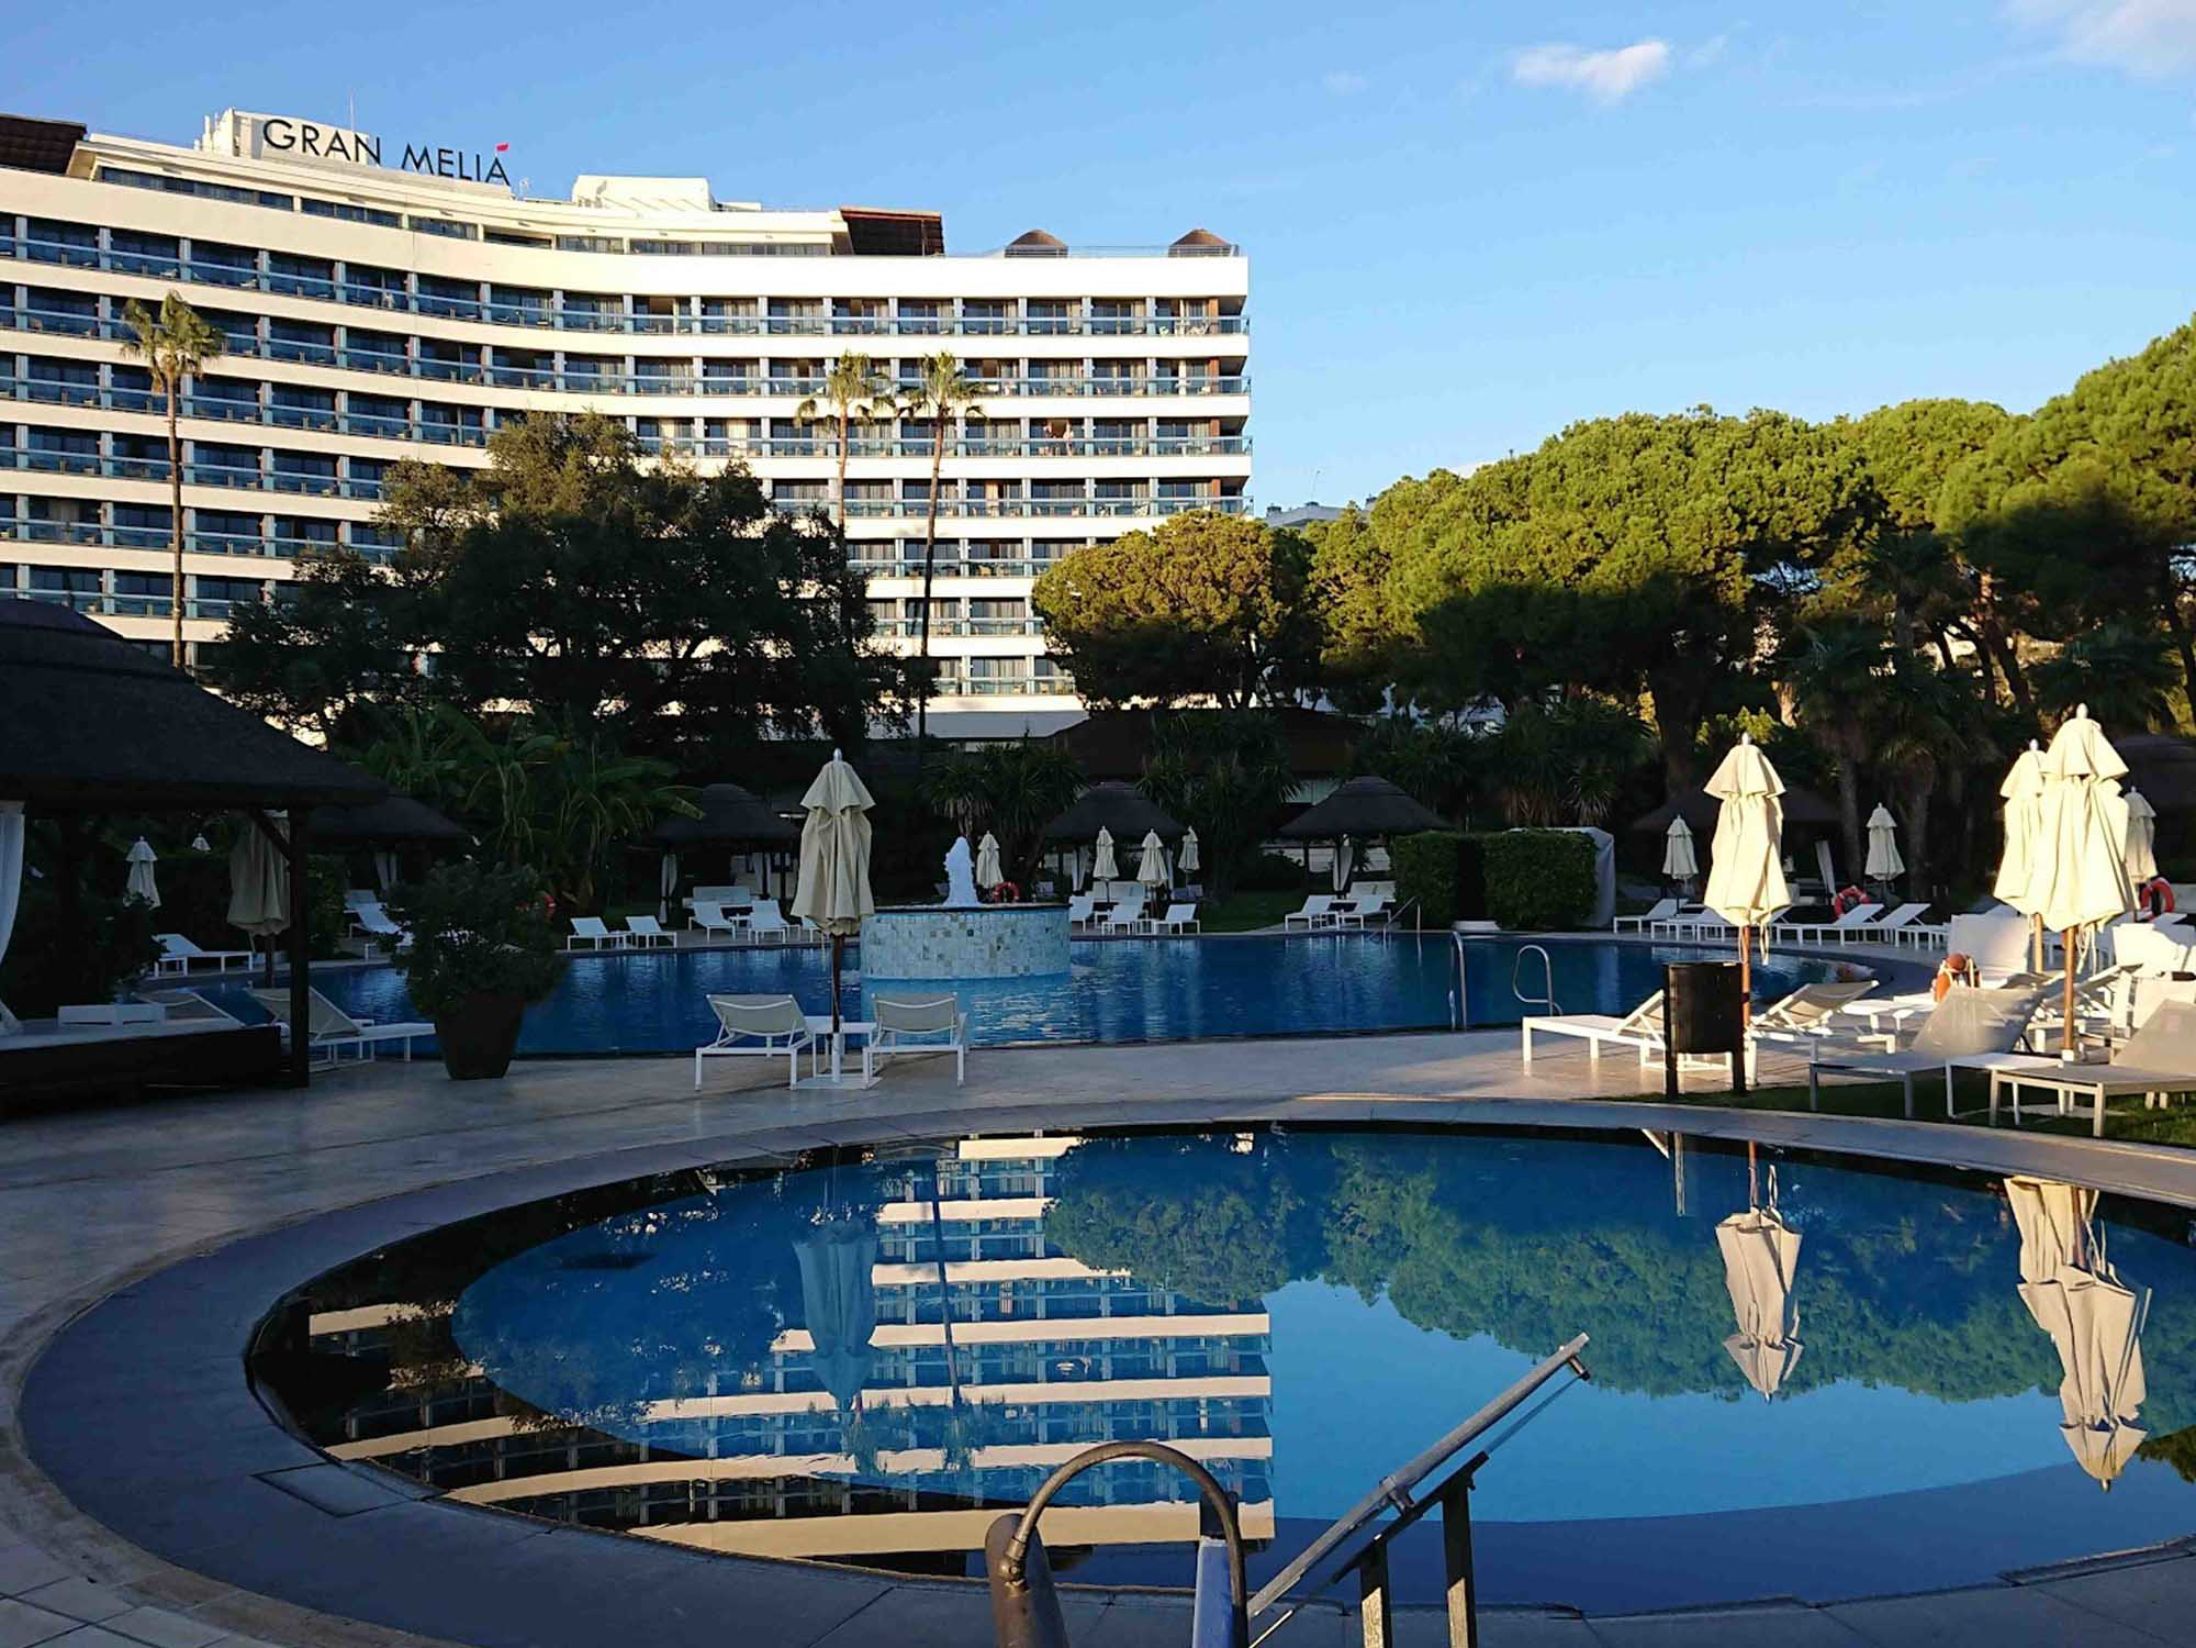 Hotel Don Pepe Gran Meliá - Best Hotels in Marbella